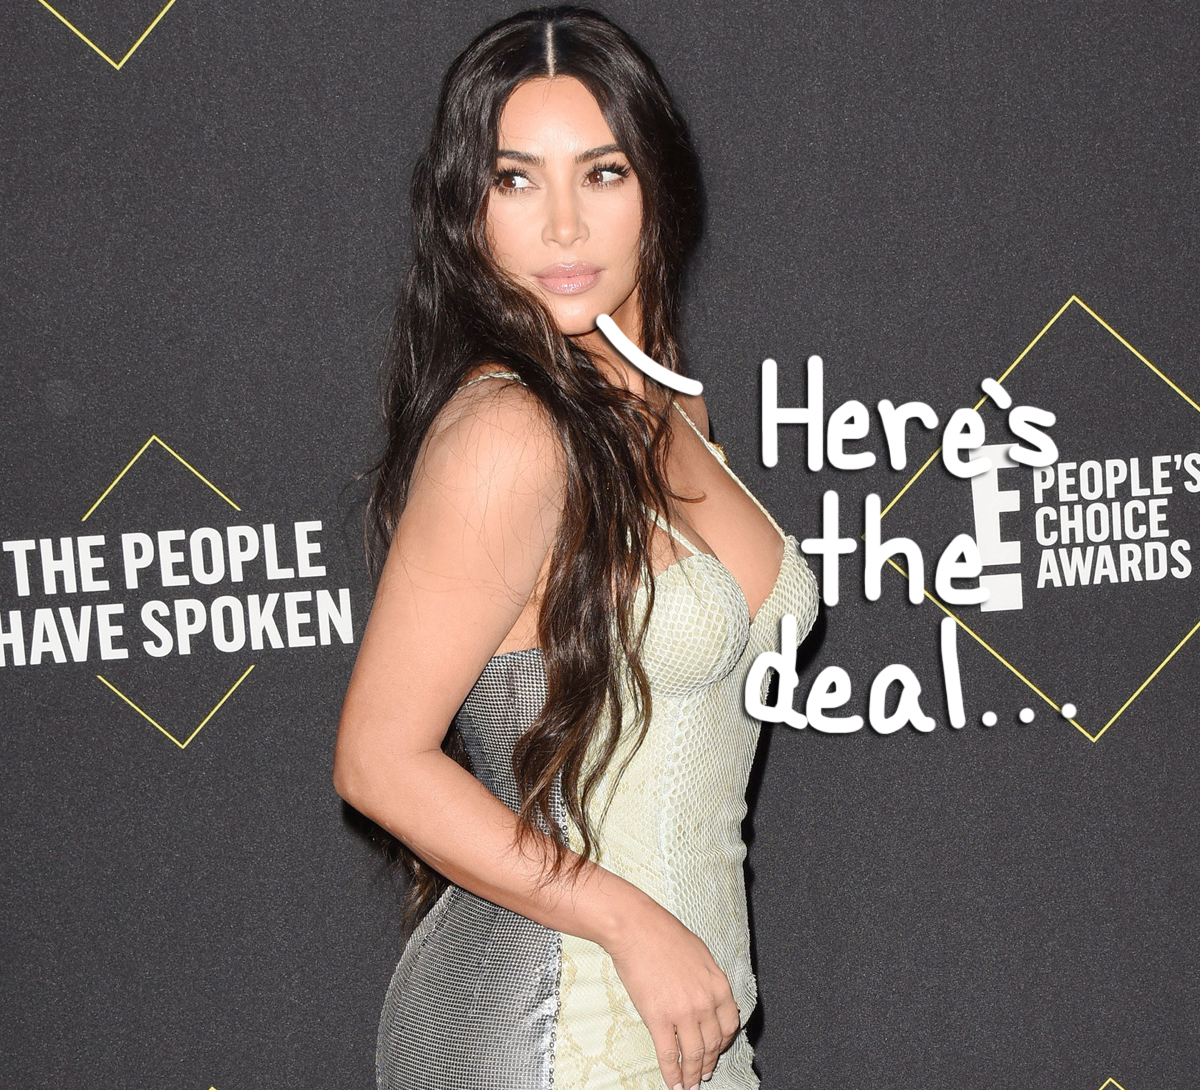 I'm pregnant and tried Kim Kardashian's Skims maternity line - I